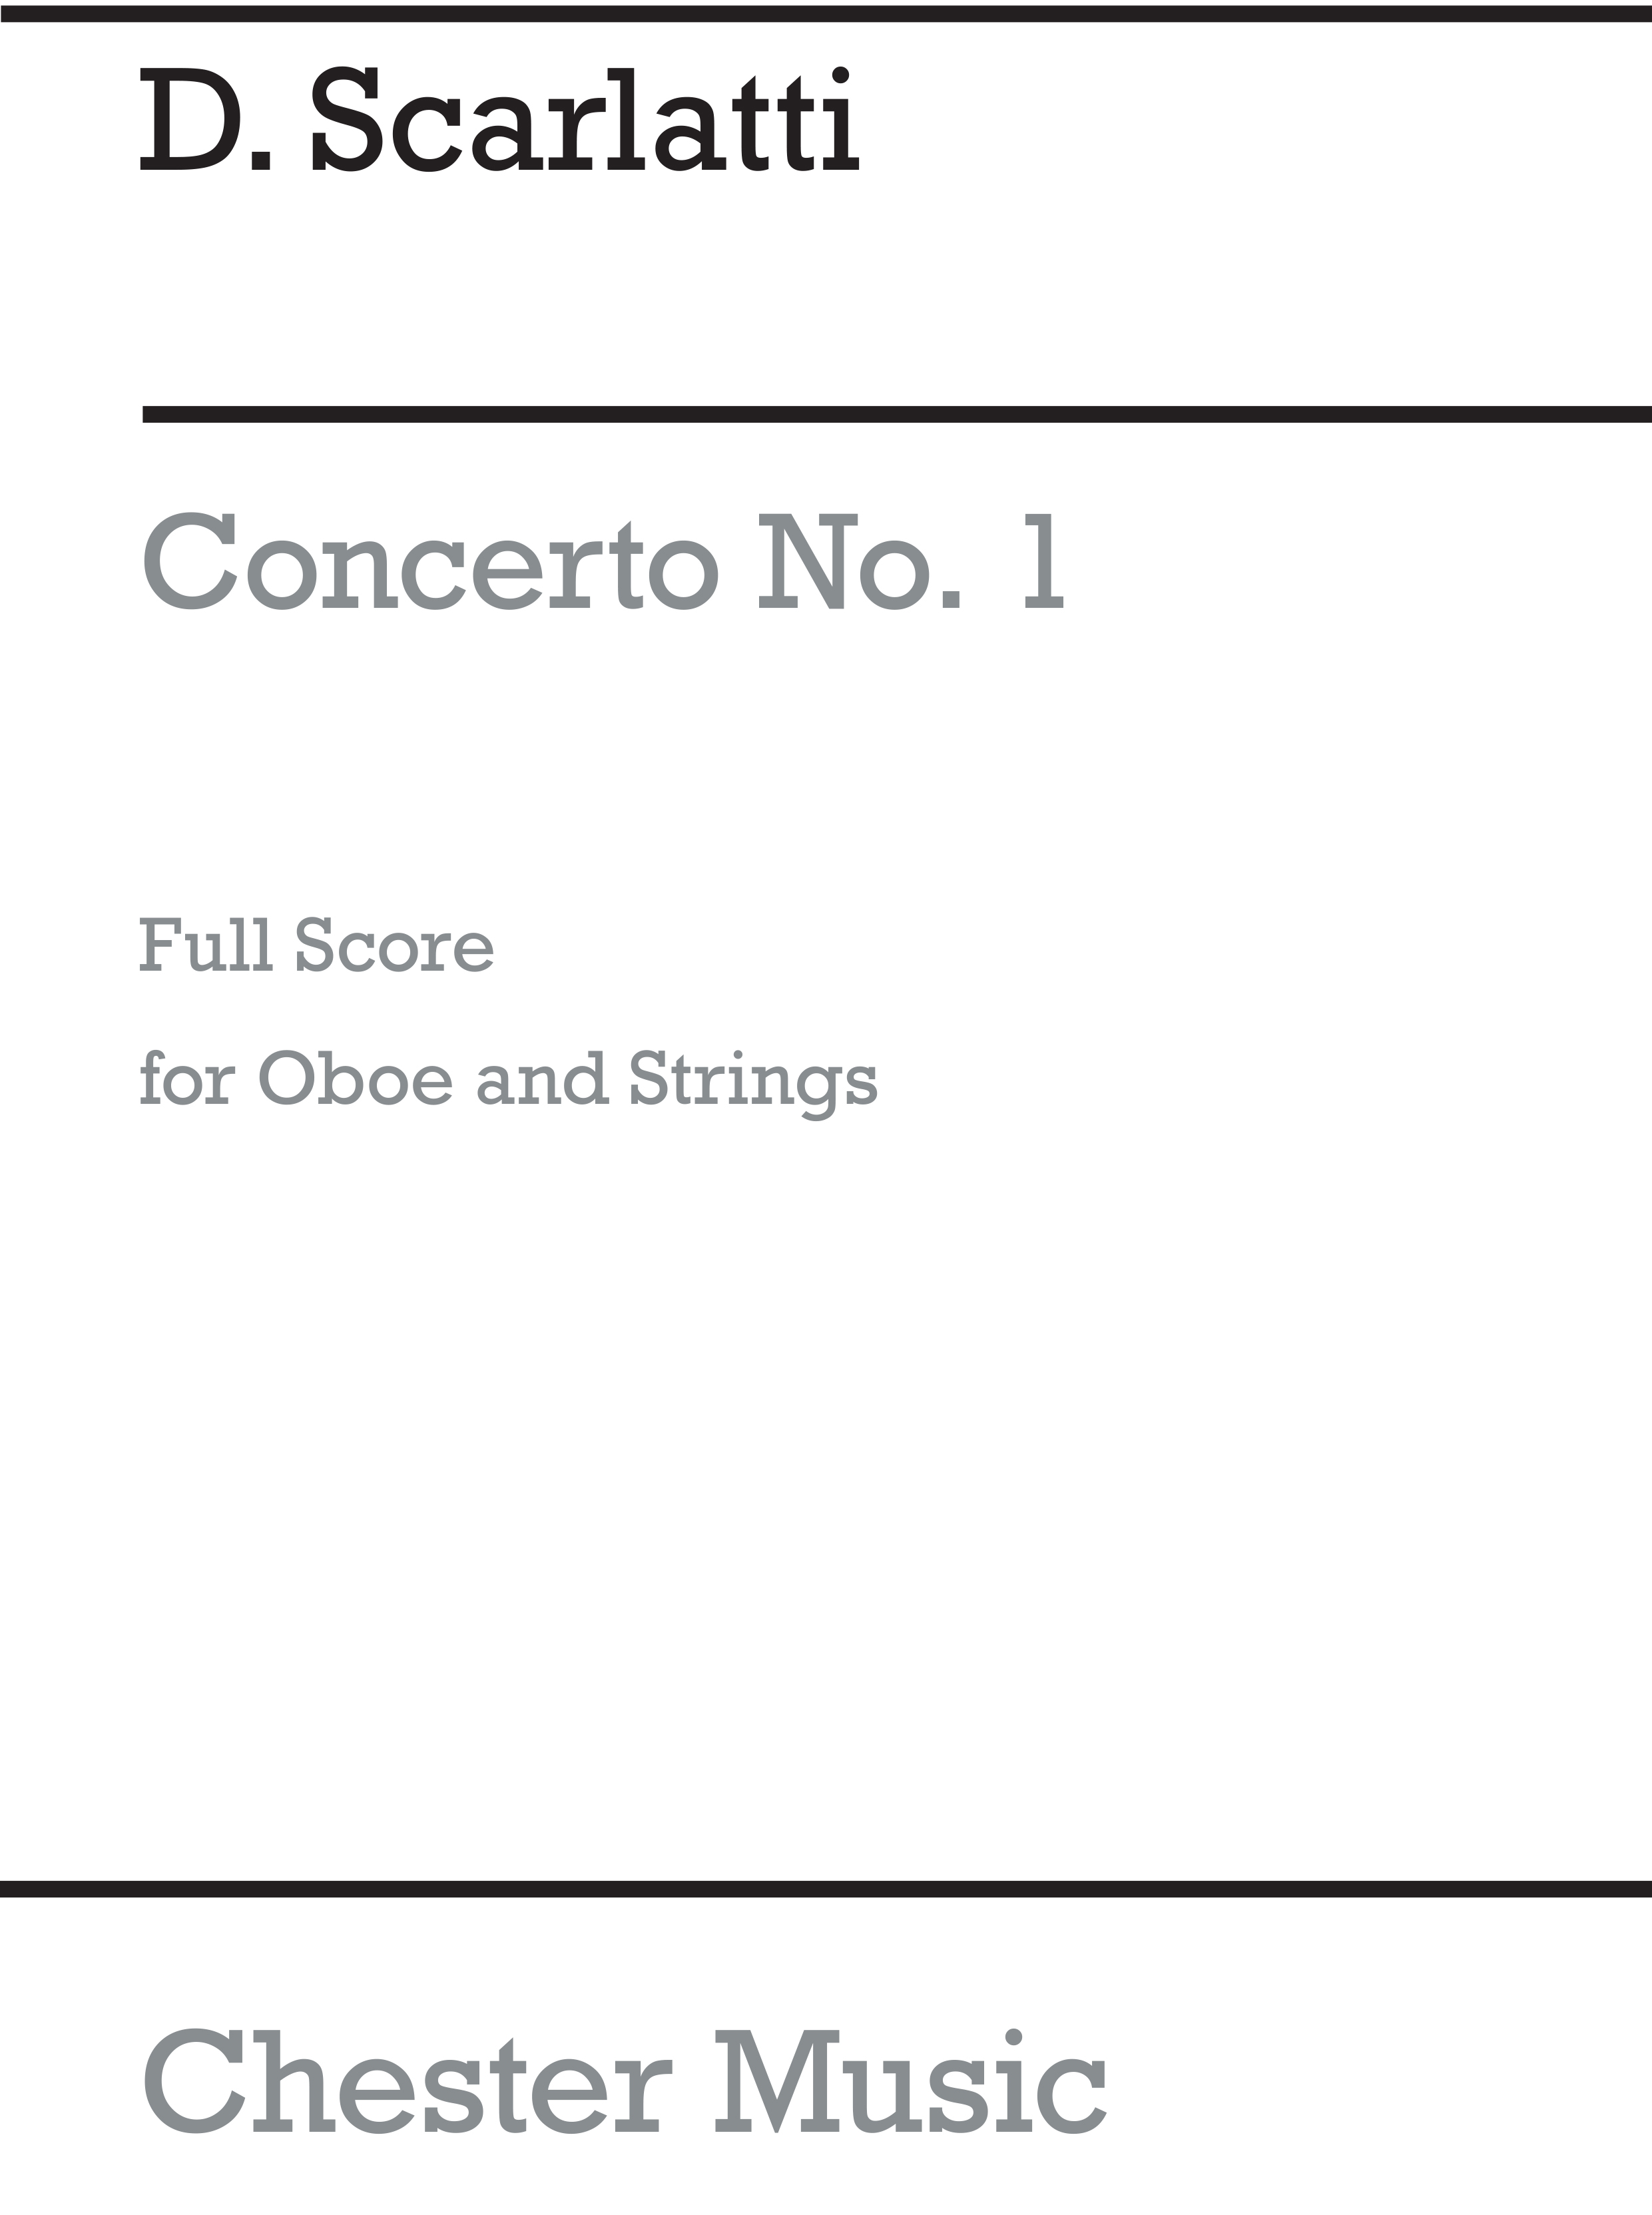 Scarlatti, D Concerto No 1 In G Major For Oboe And Strings Full Score